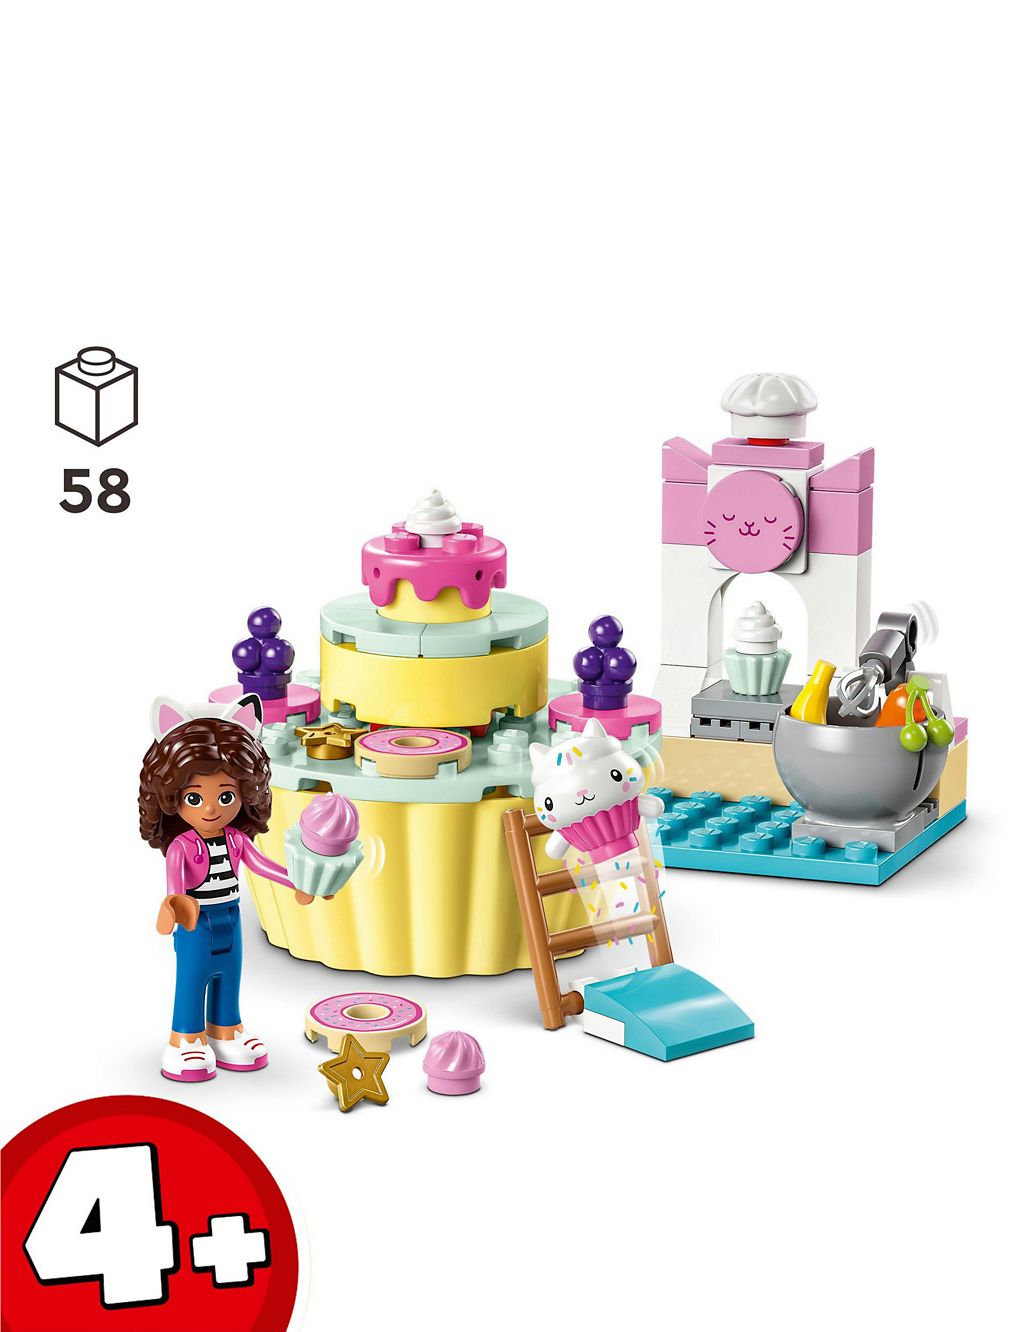 LEGO Gabby's Dollhouse Bakey with Cakey Fun 10785 (4+ Yrs) 2 of 6